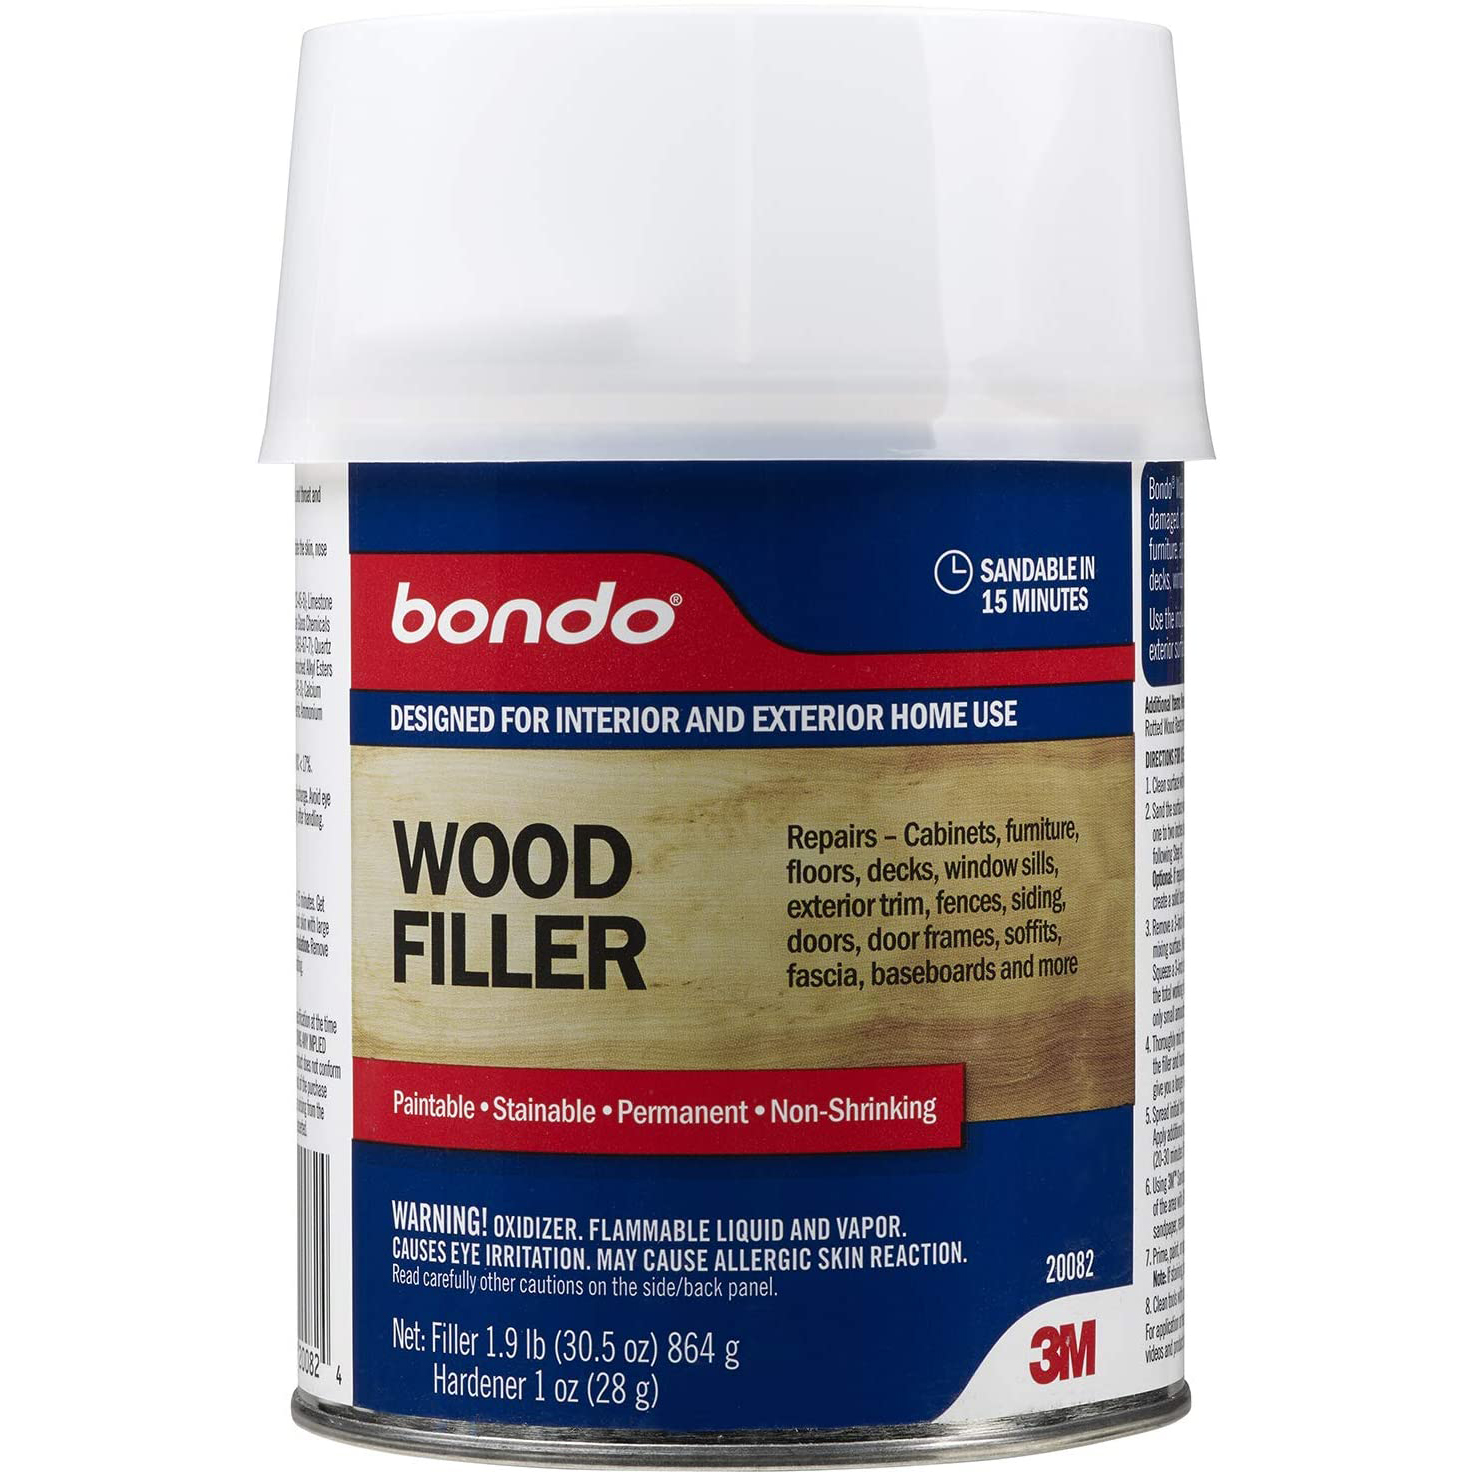 Bondo Wood Filler